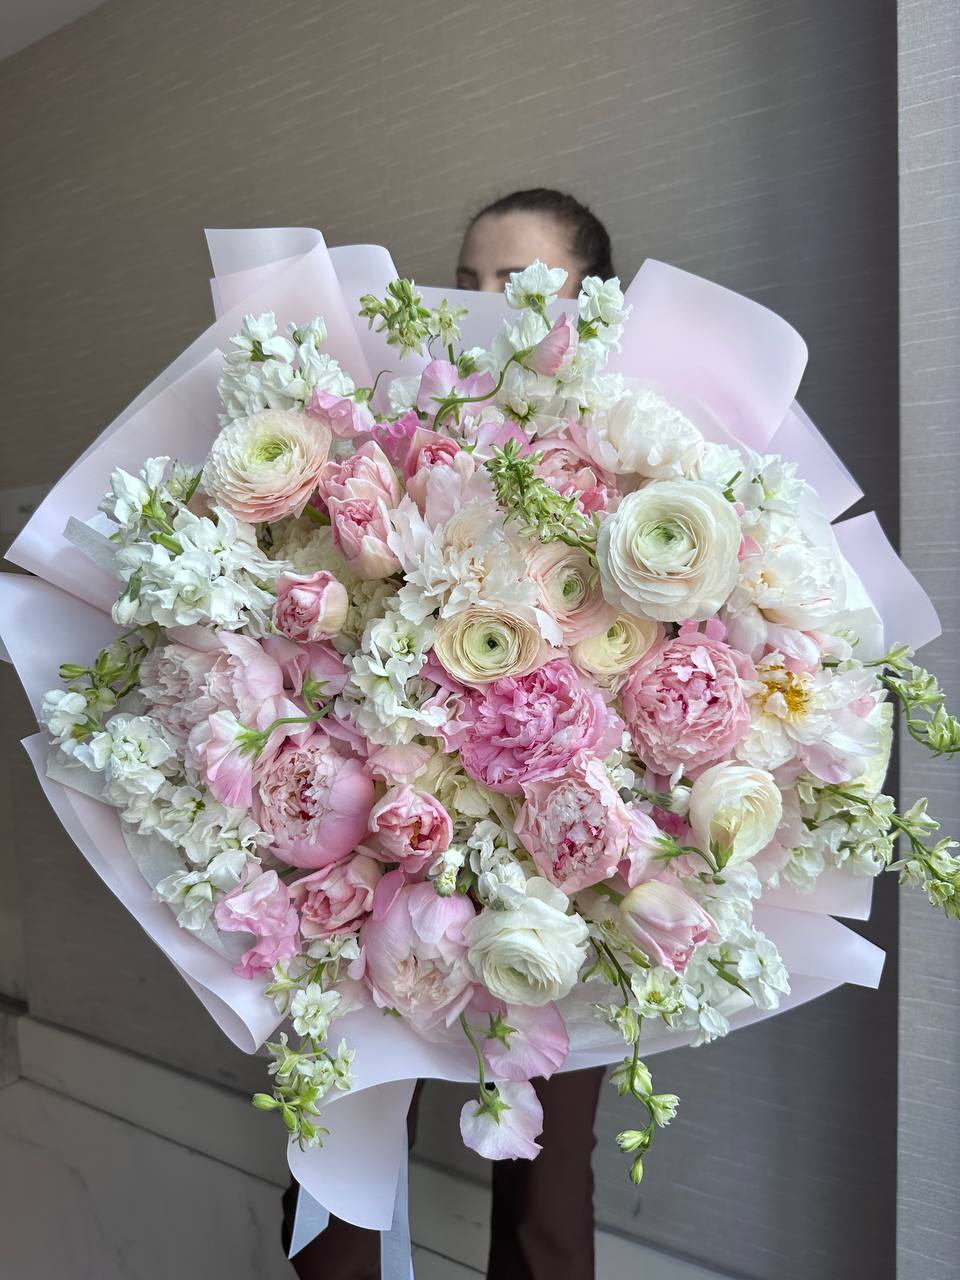 pink peony wedding bouquet, Love letter - Peonies, ranunculus, hydrangea, stock, Dutch tulips